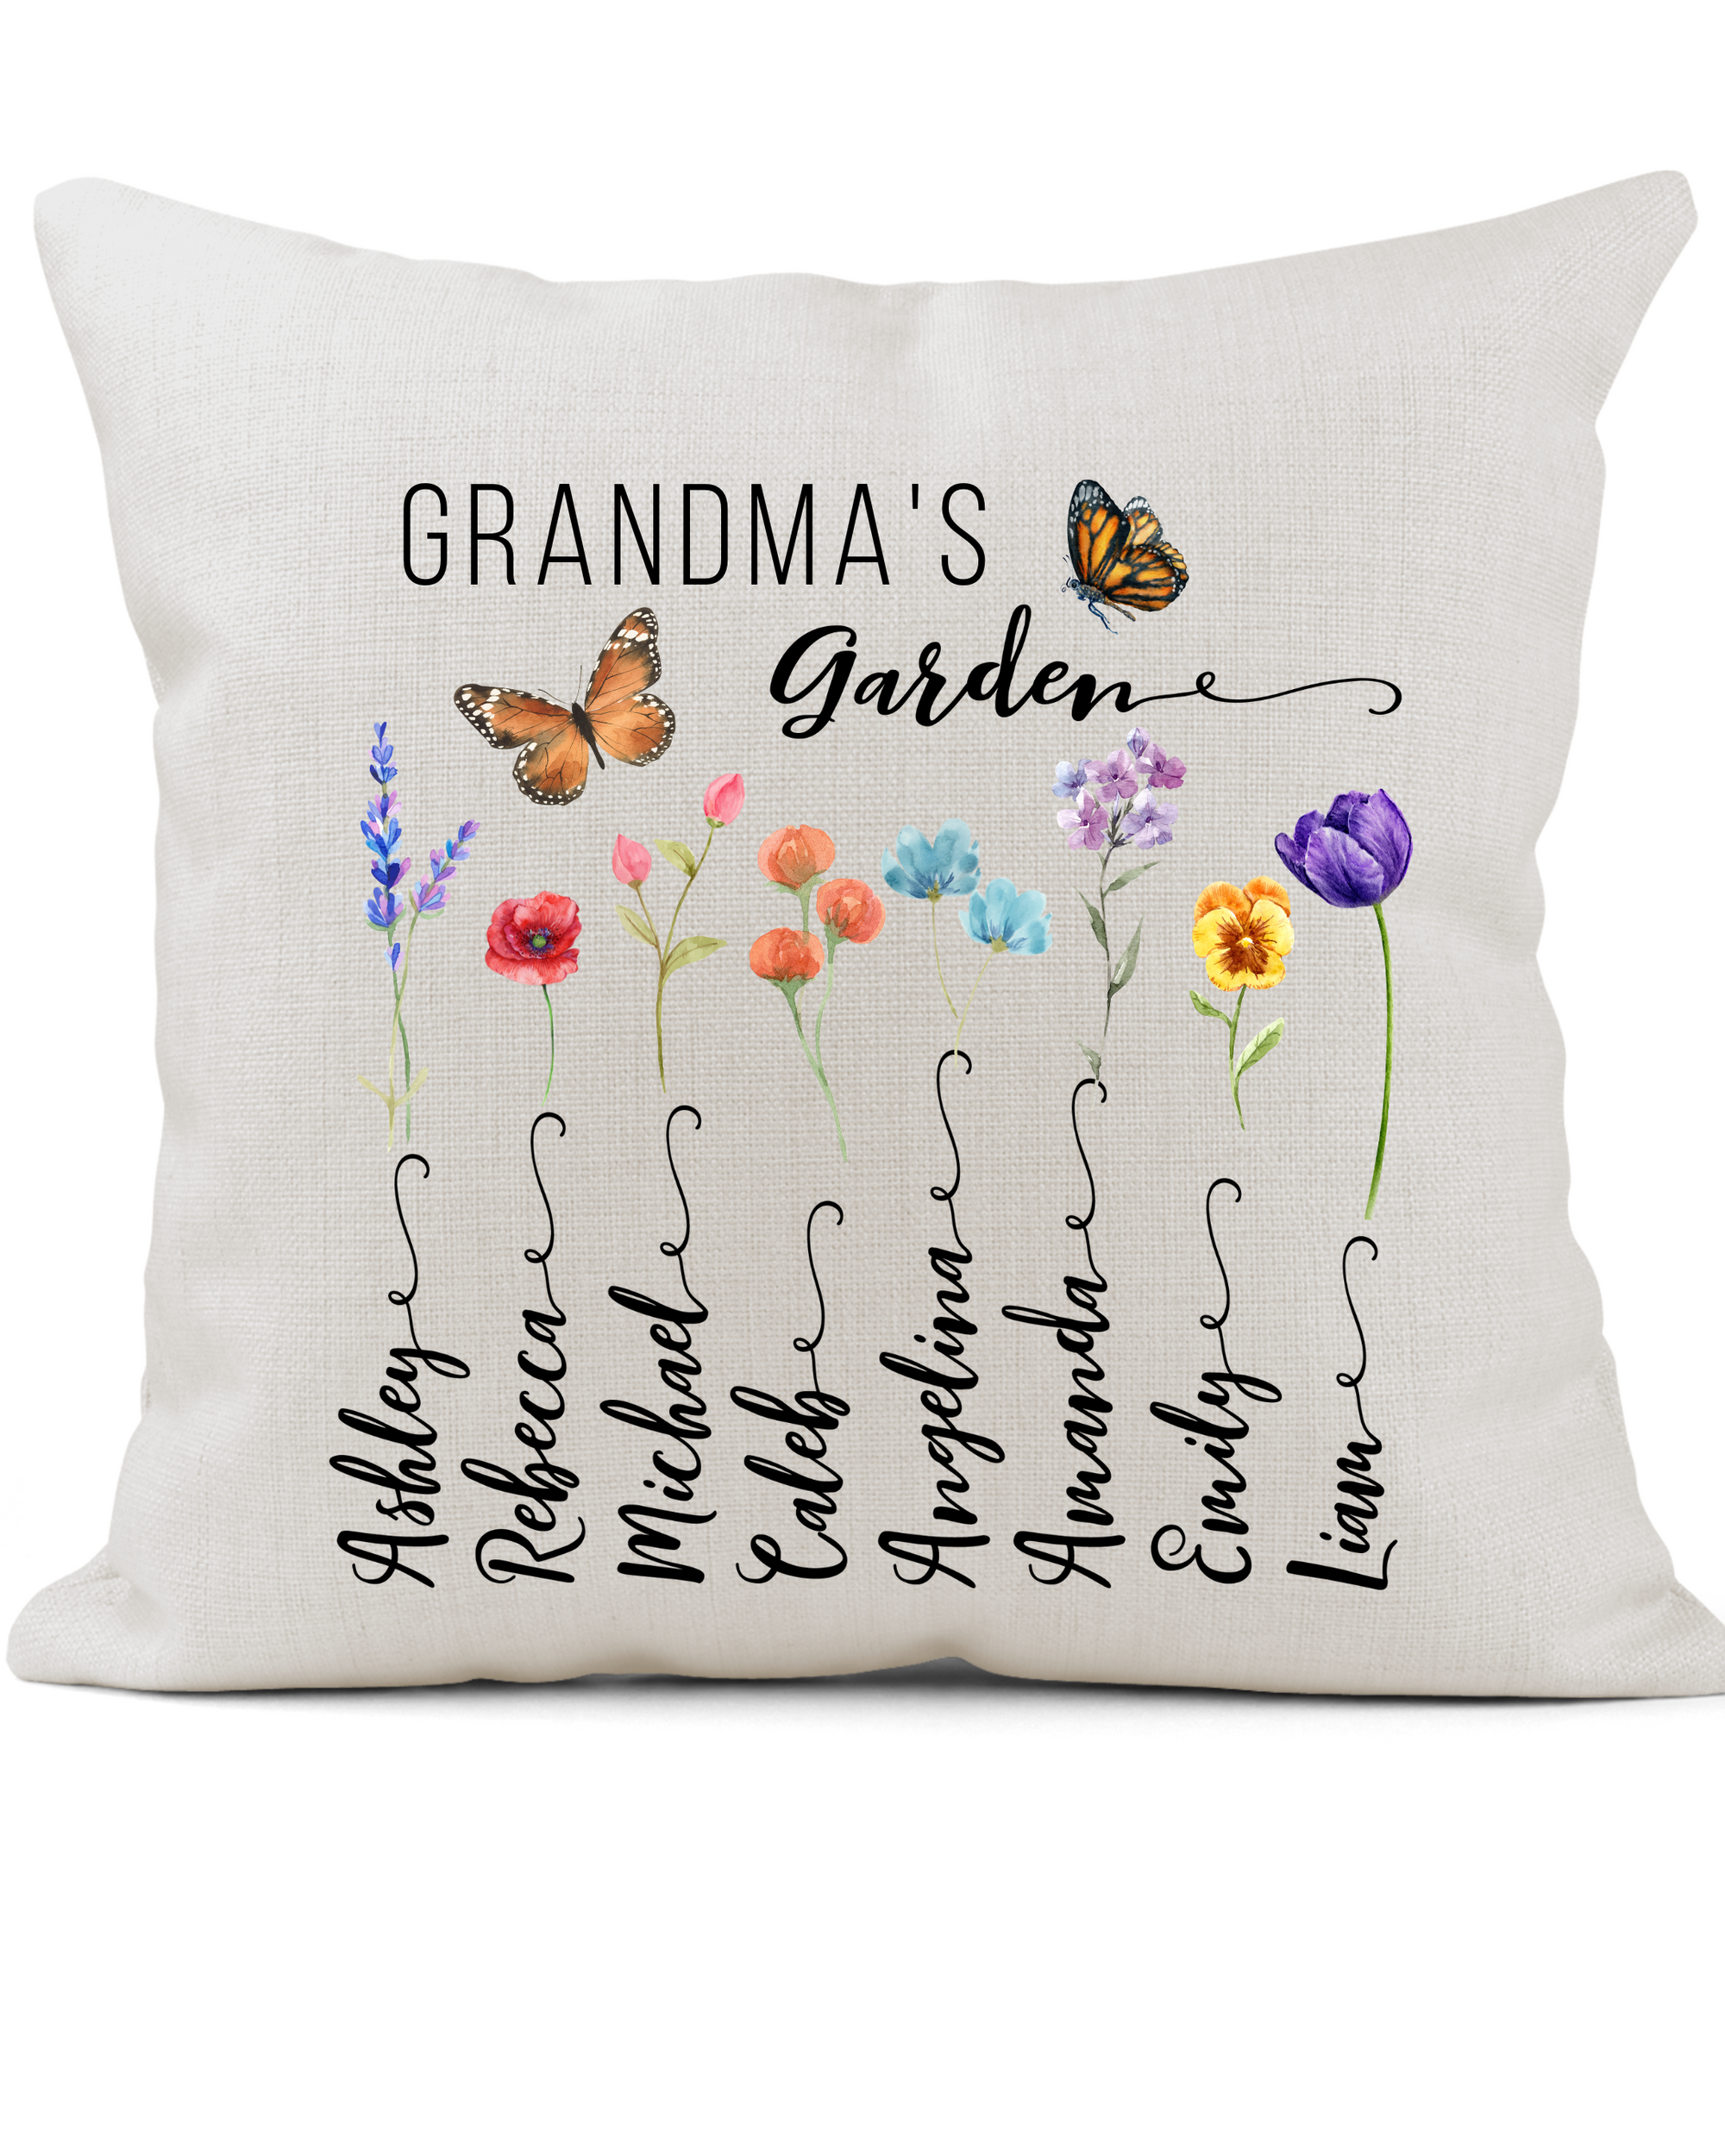 Grandma's Garden Pillow